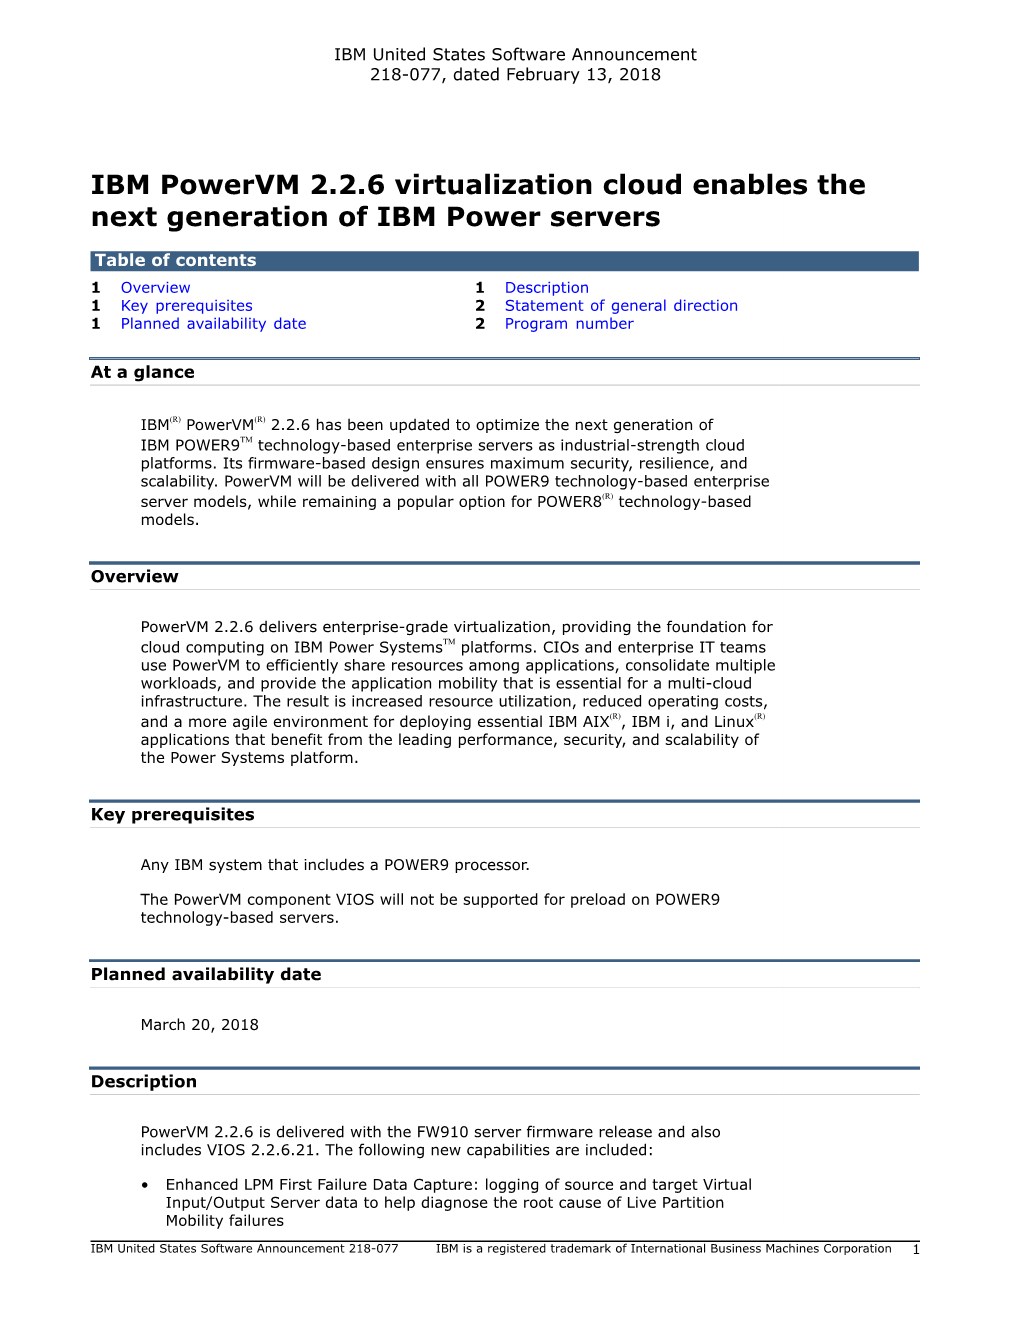 IBM Powervm 2.2.6 Virtualization Cloud Enables the Next Generation of IBM Power Servers